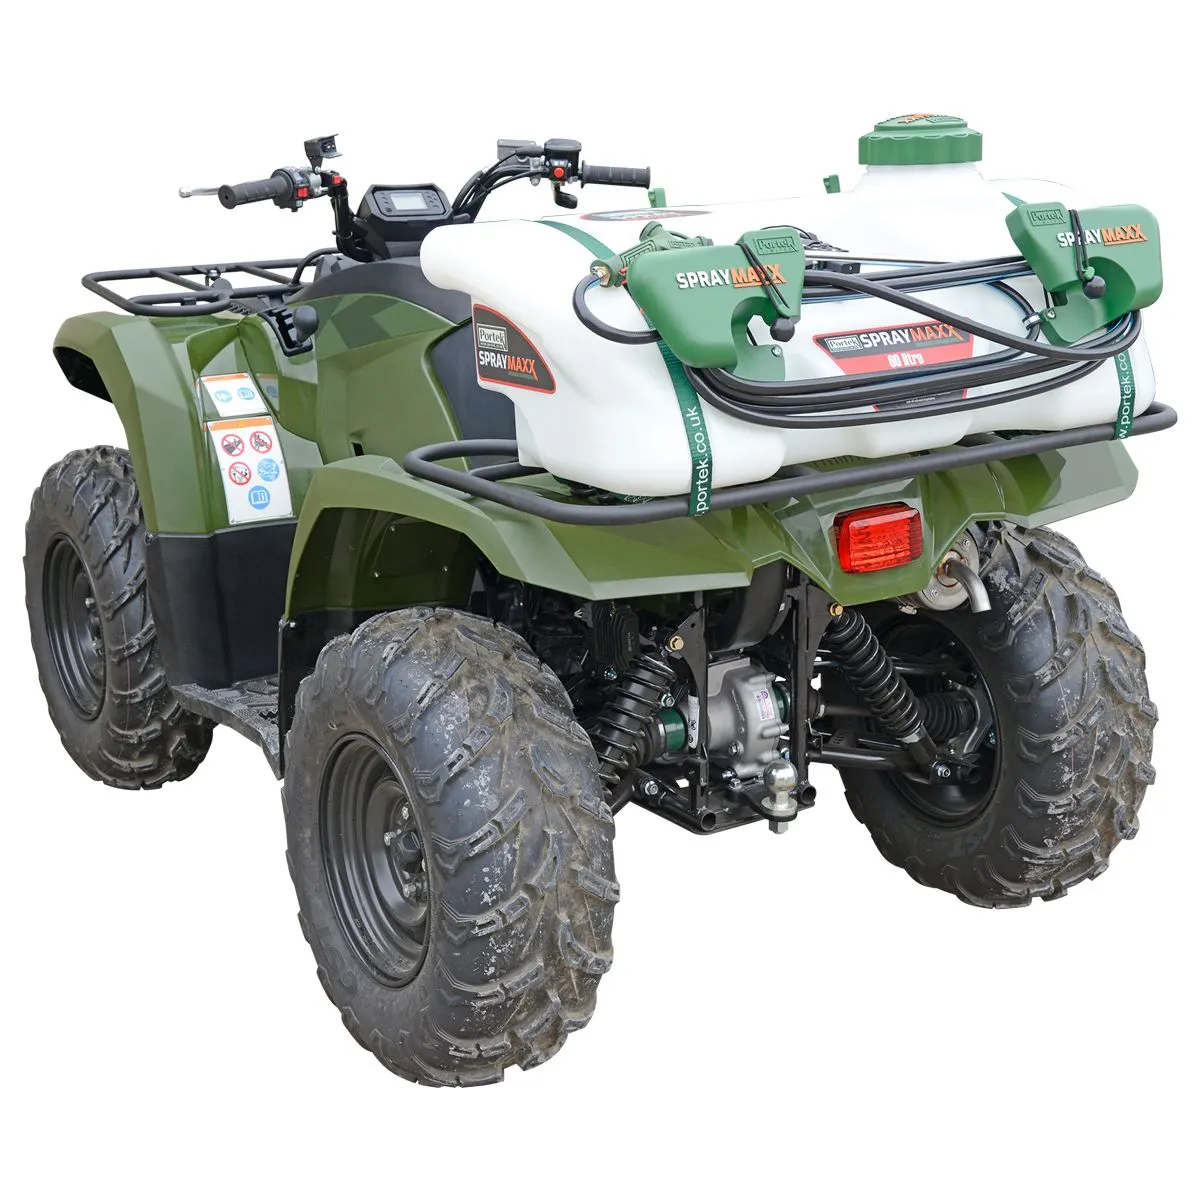 Portek Spraymaxx Pro Series Quad ATV Spot Sprayer 60L (8.3L/min pump)